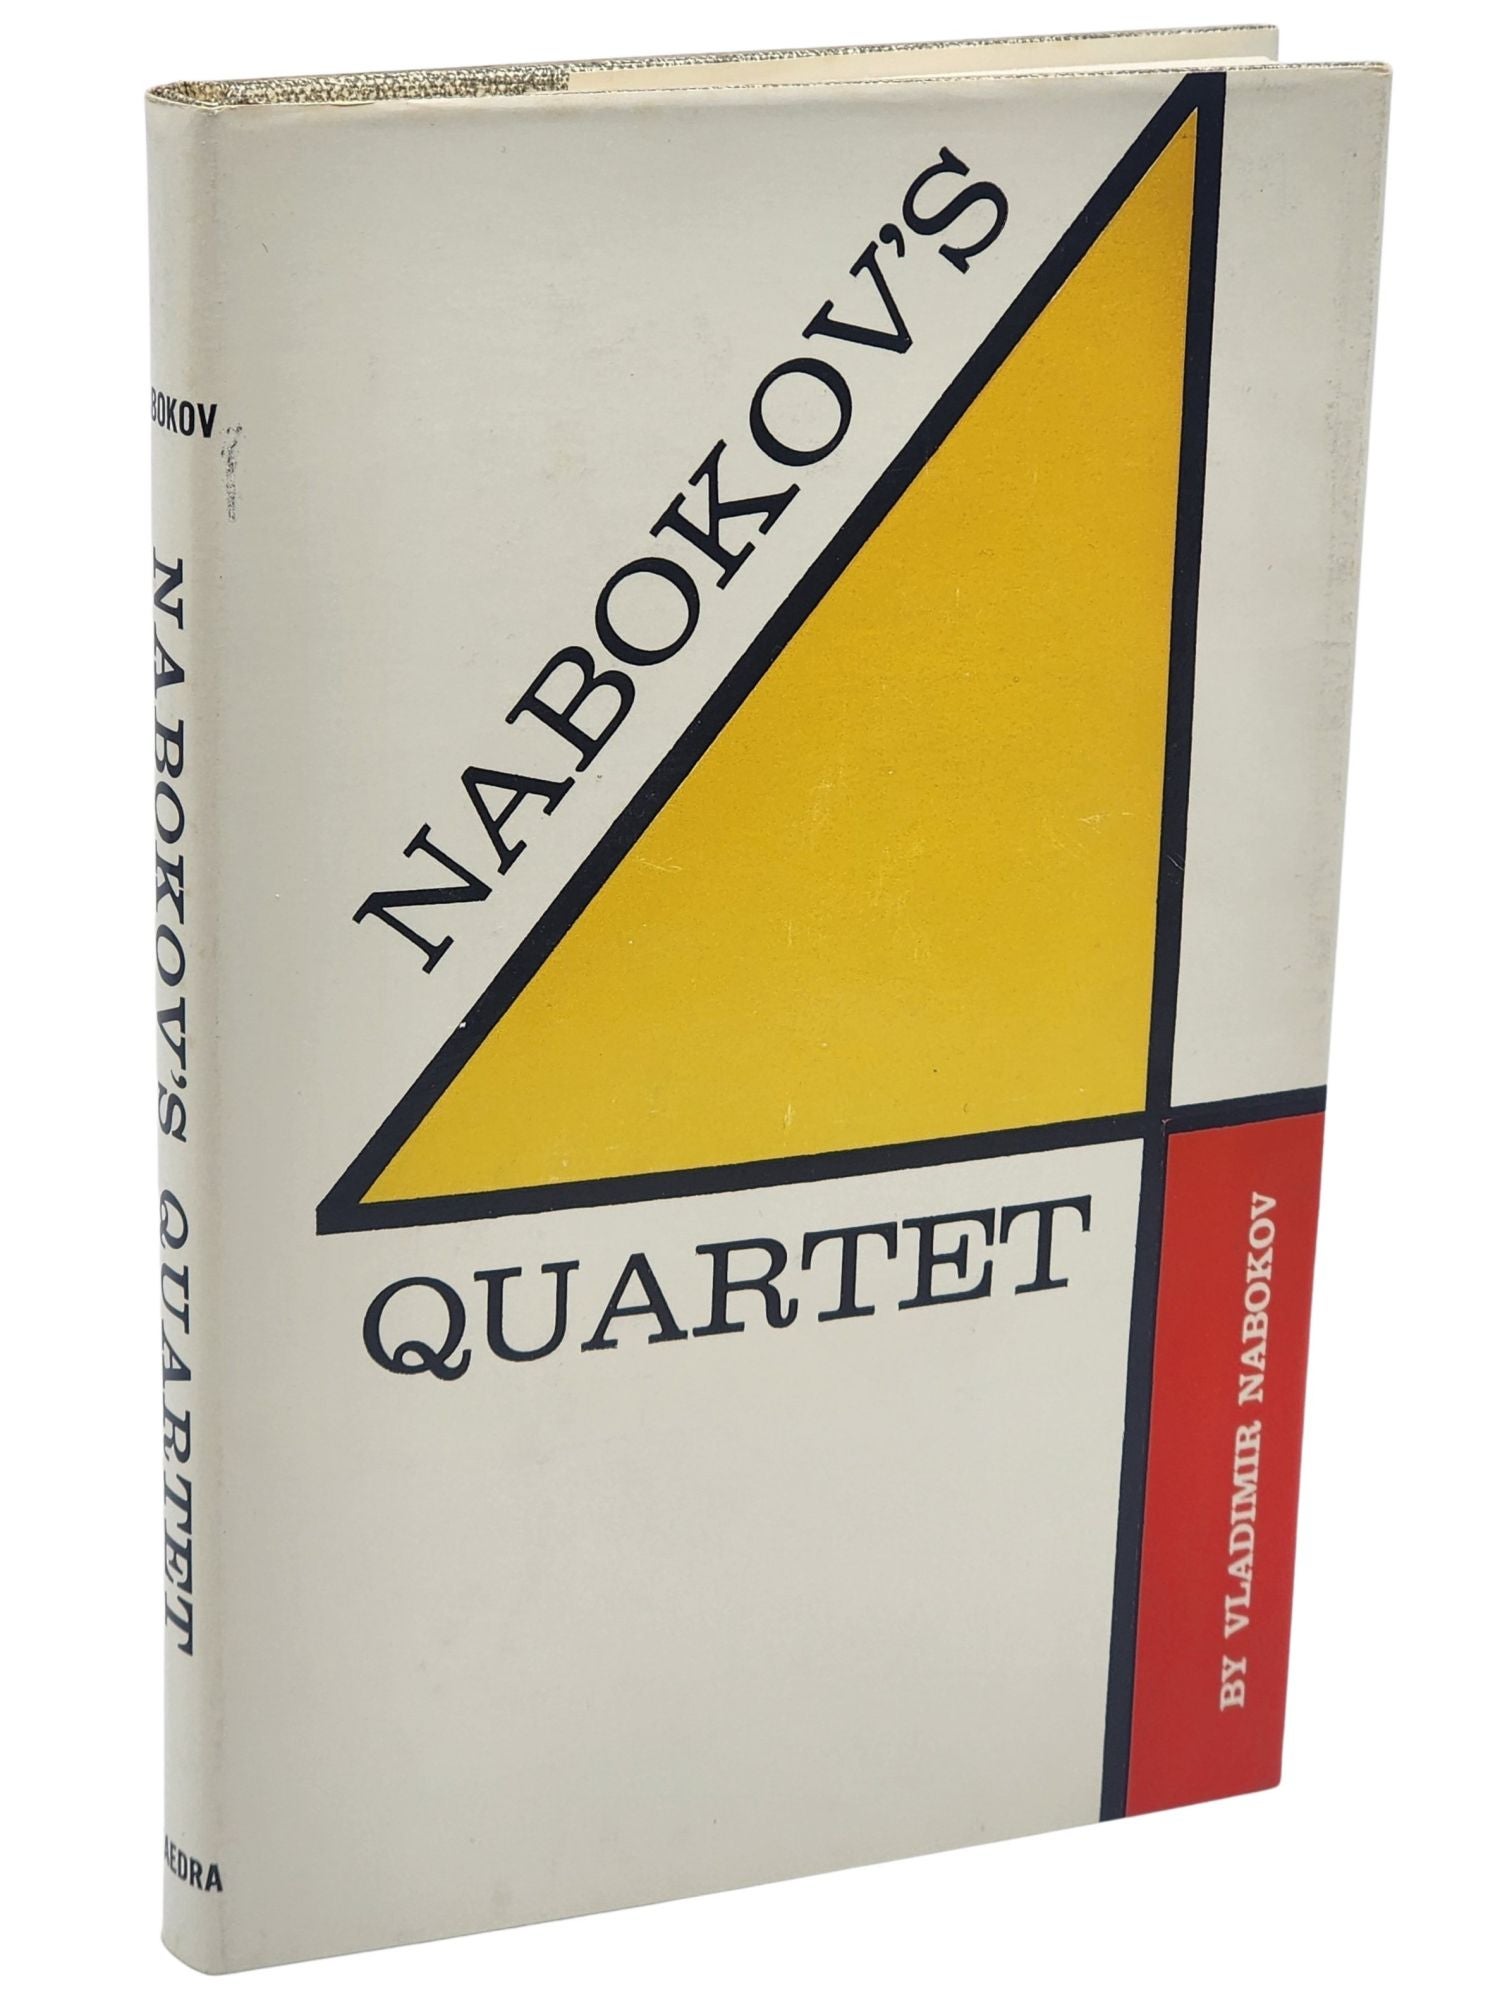 [Book #1273] NABOKOV'S QUARTET. Vladimir Nabokov.